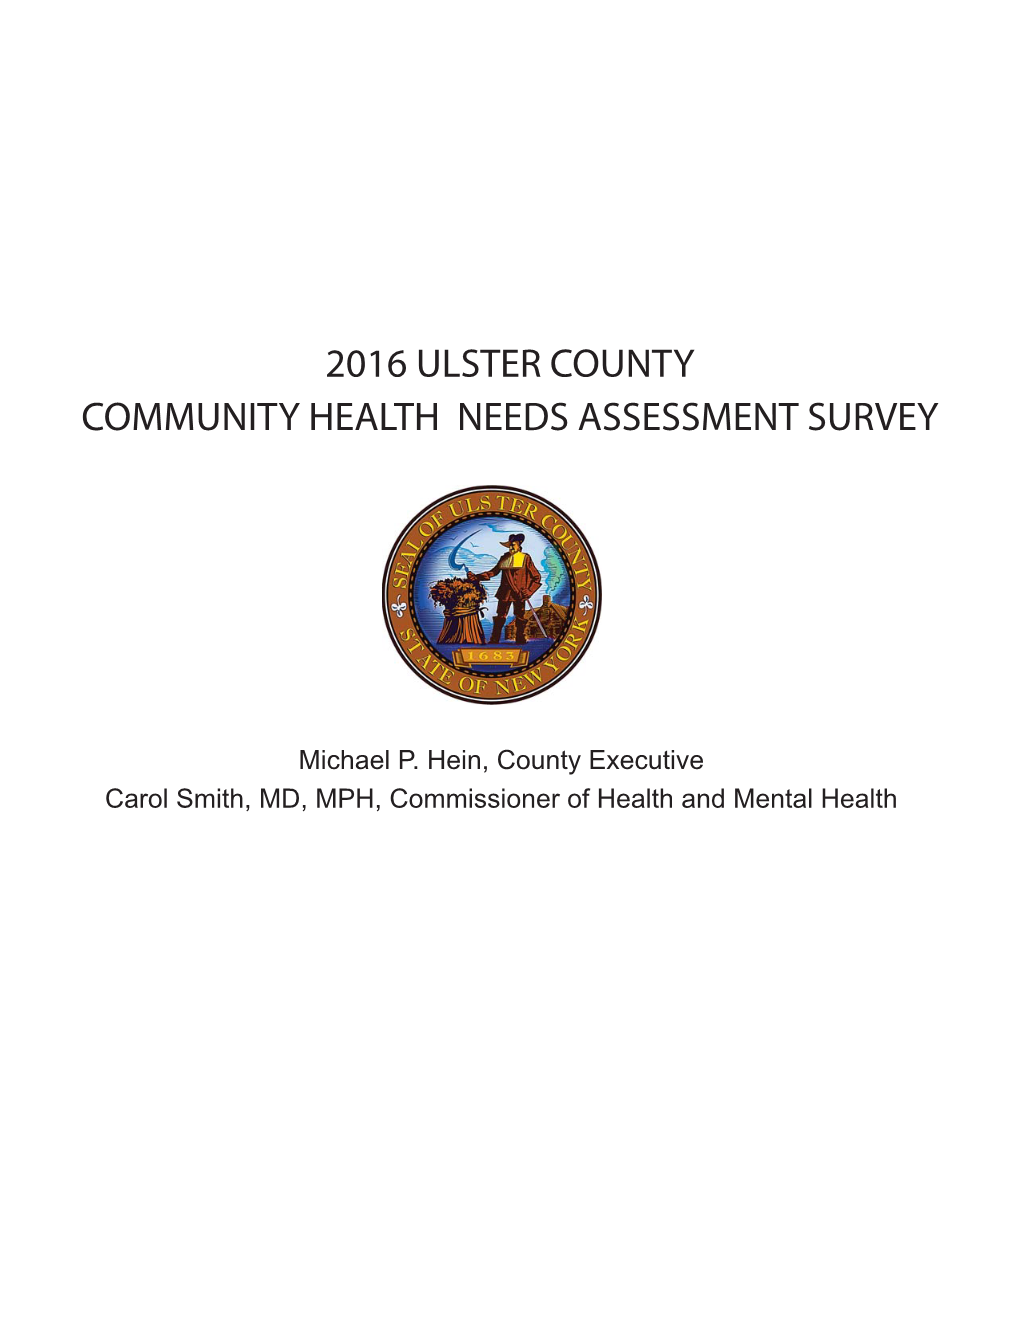 2016 Community Health Needs Assessment Survey